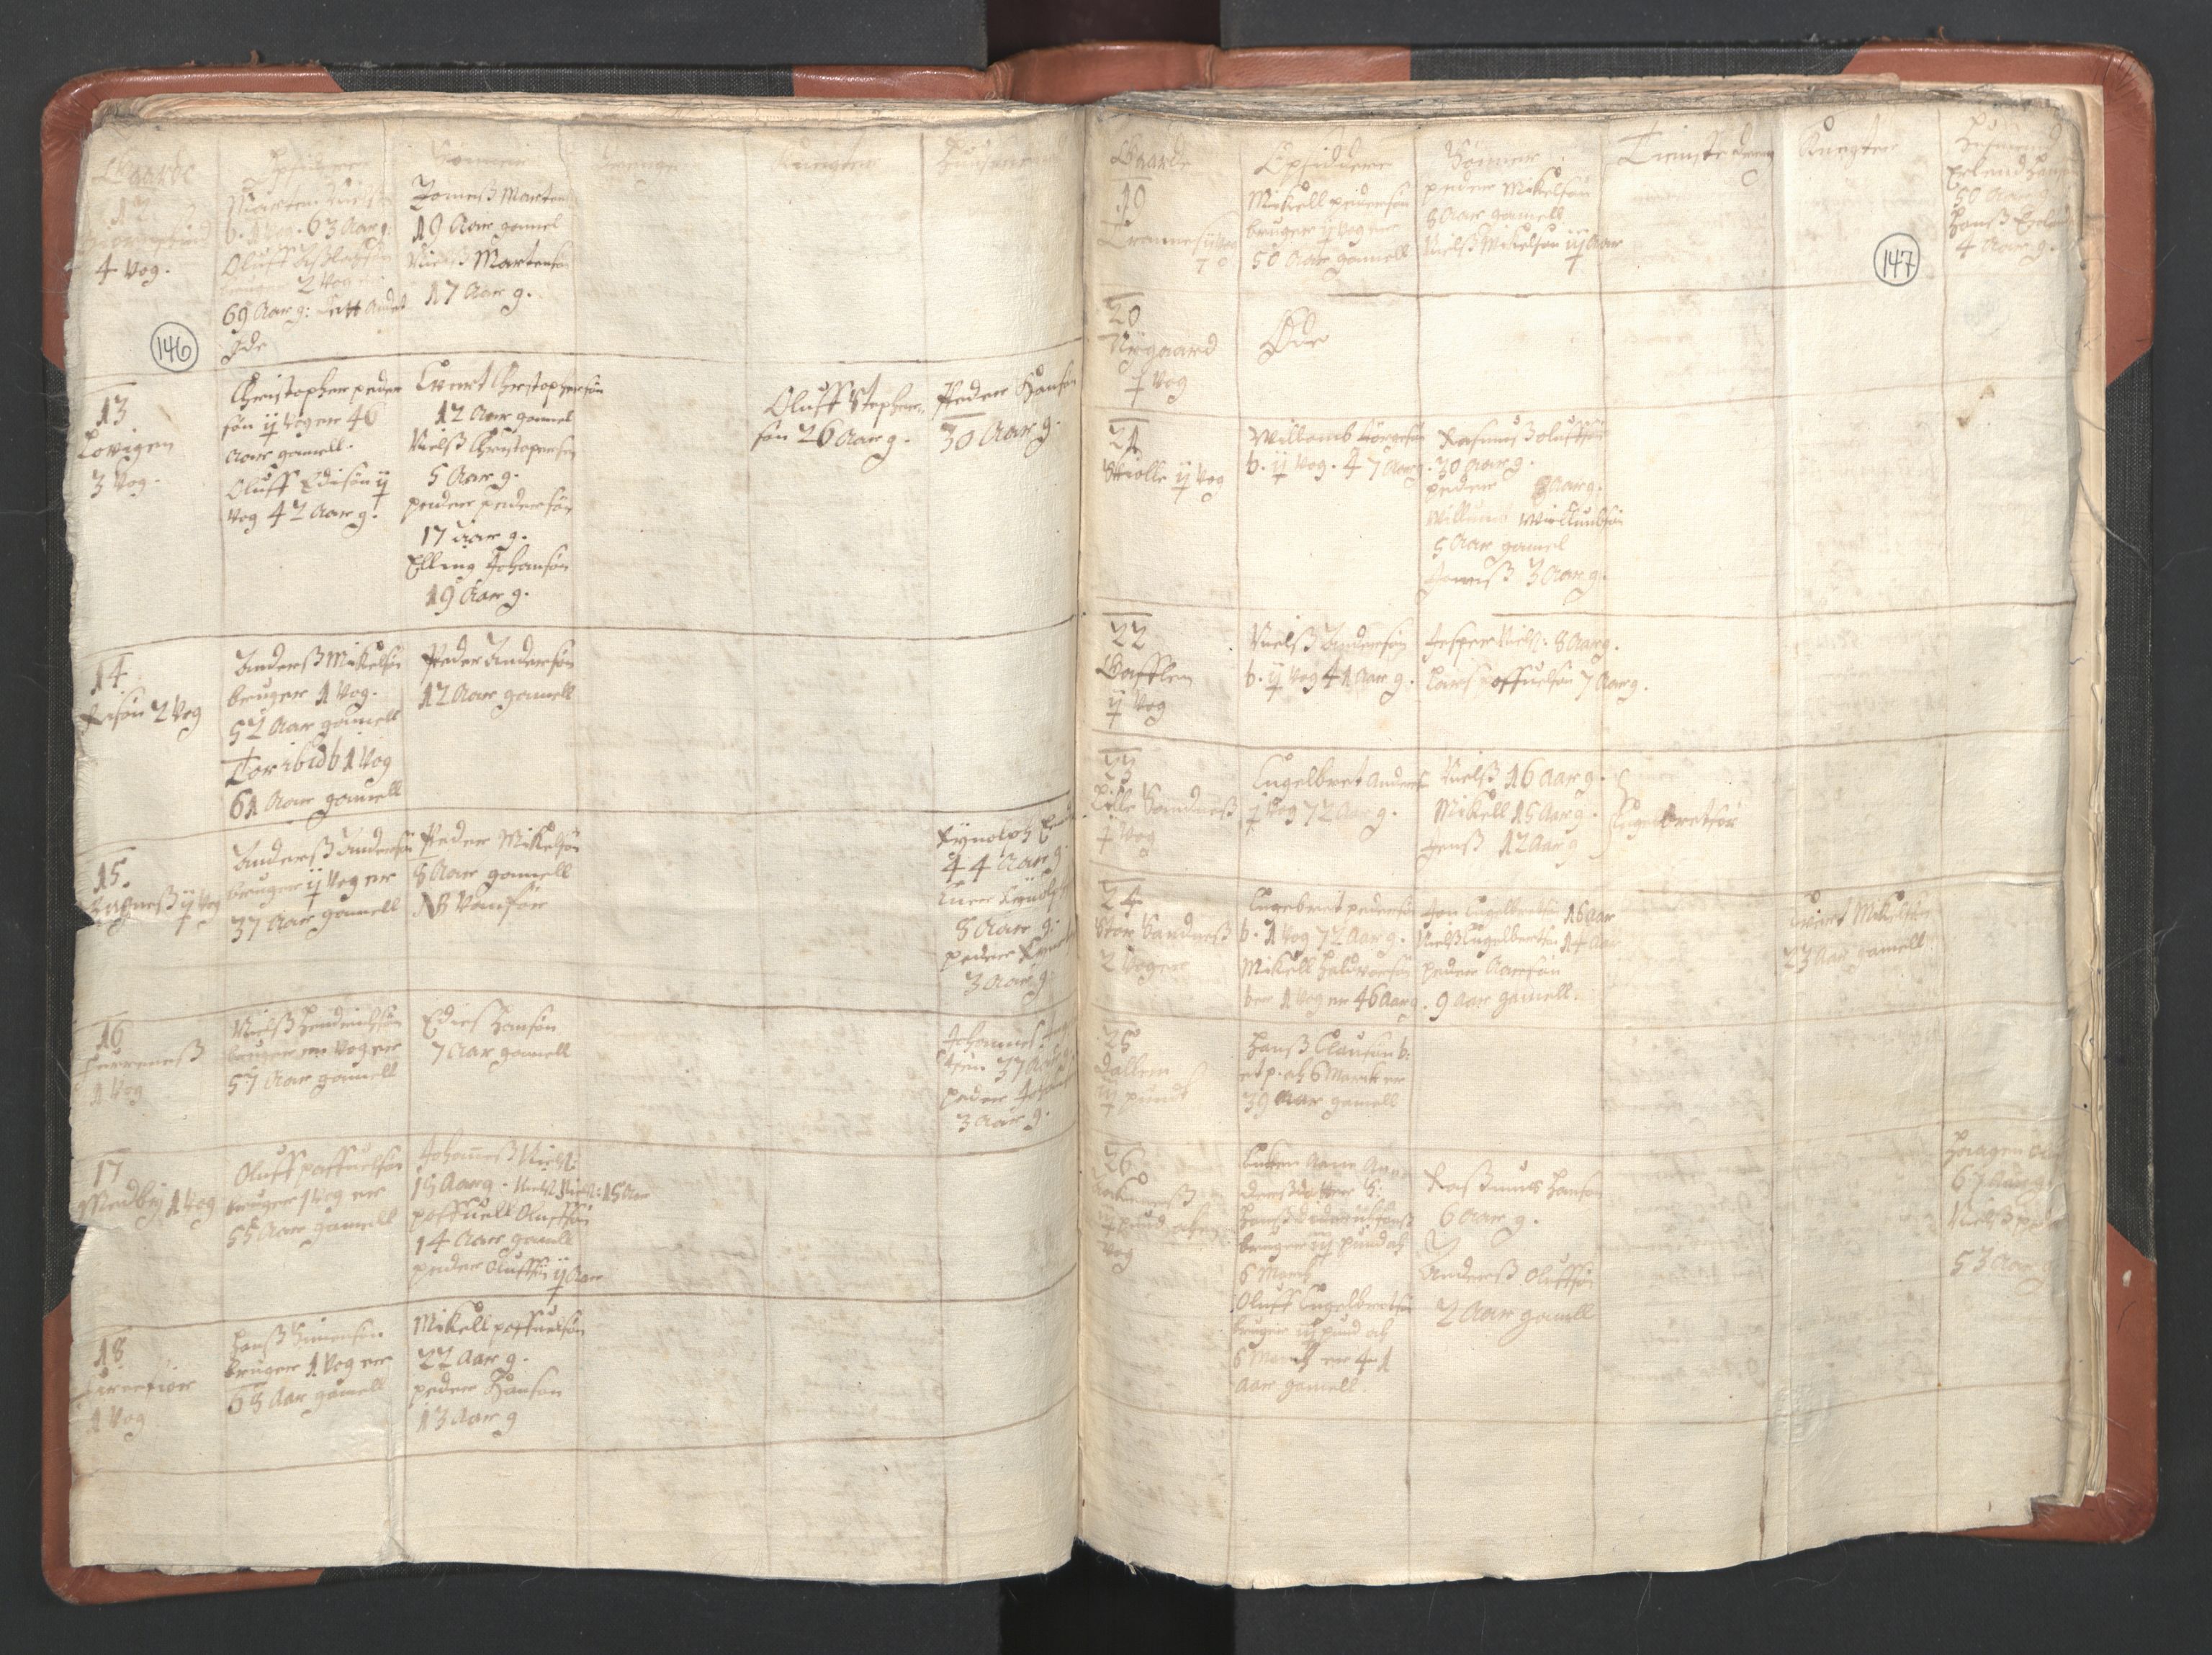 RA, Vicar's Census 1664-1666, no. 36: Lofoten and Vesterålen deanery, Senja deanery and Troms deanery, 1664-1666, p. 146-147